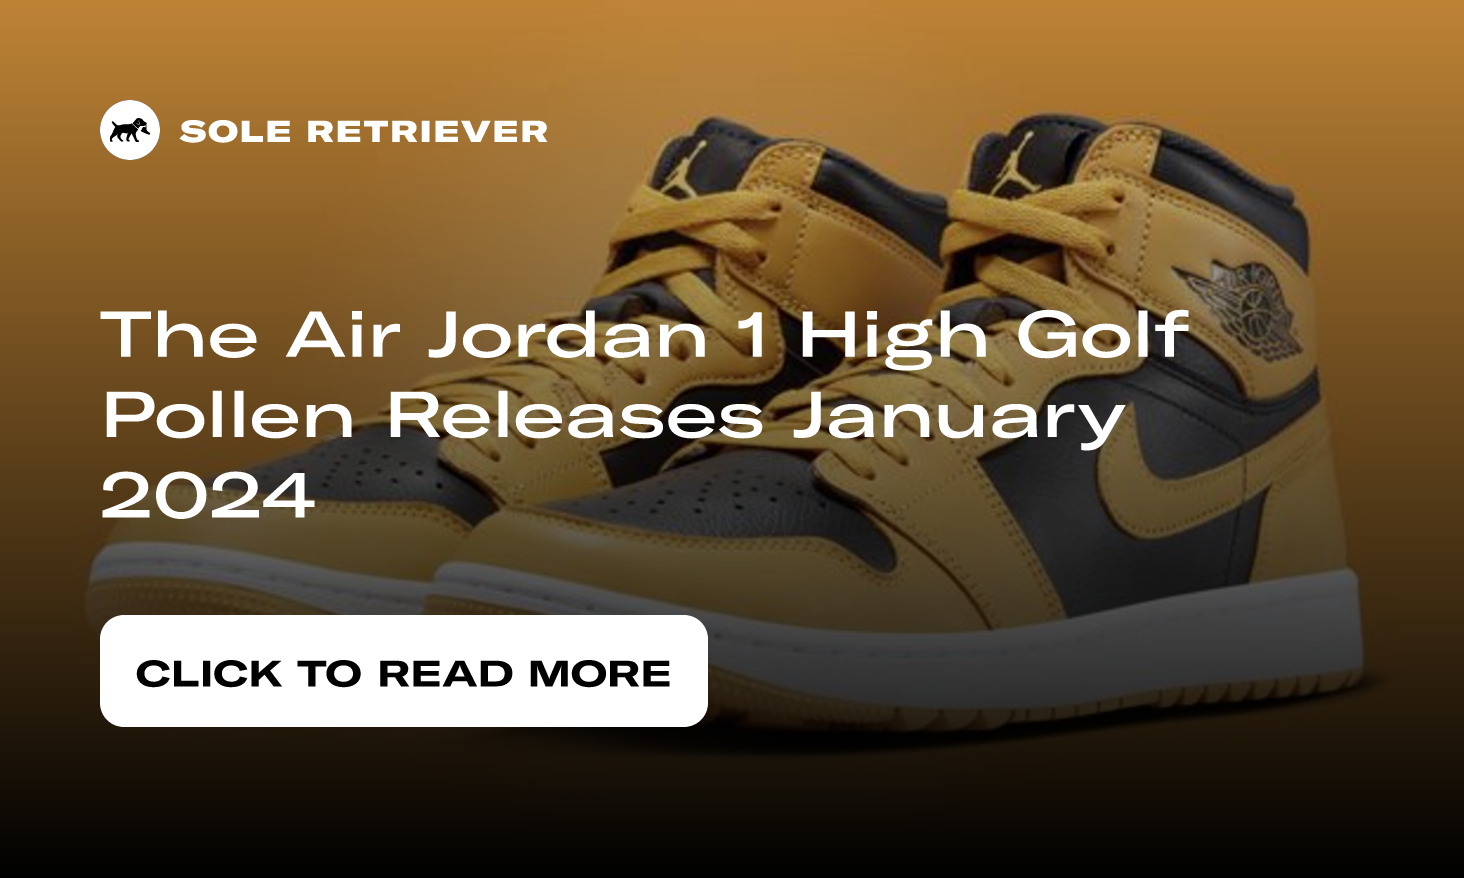 The Air Jordan 1 High Golf Pollen Releases January 2024